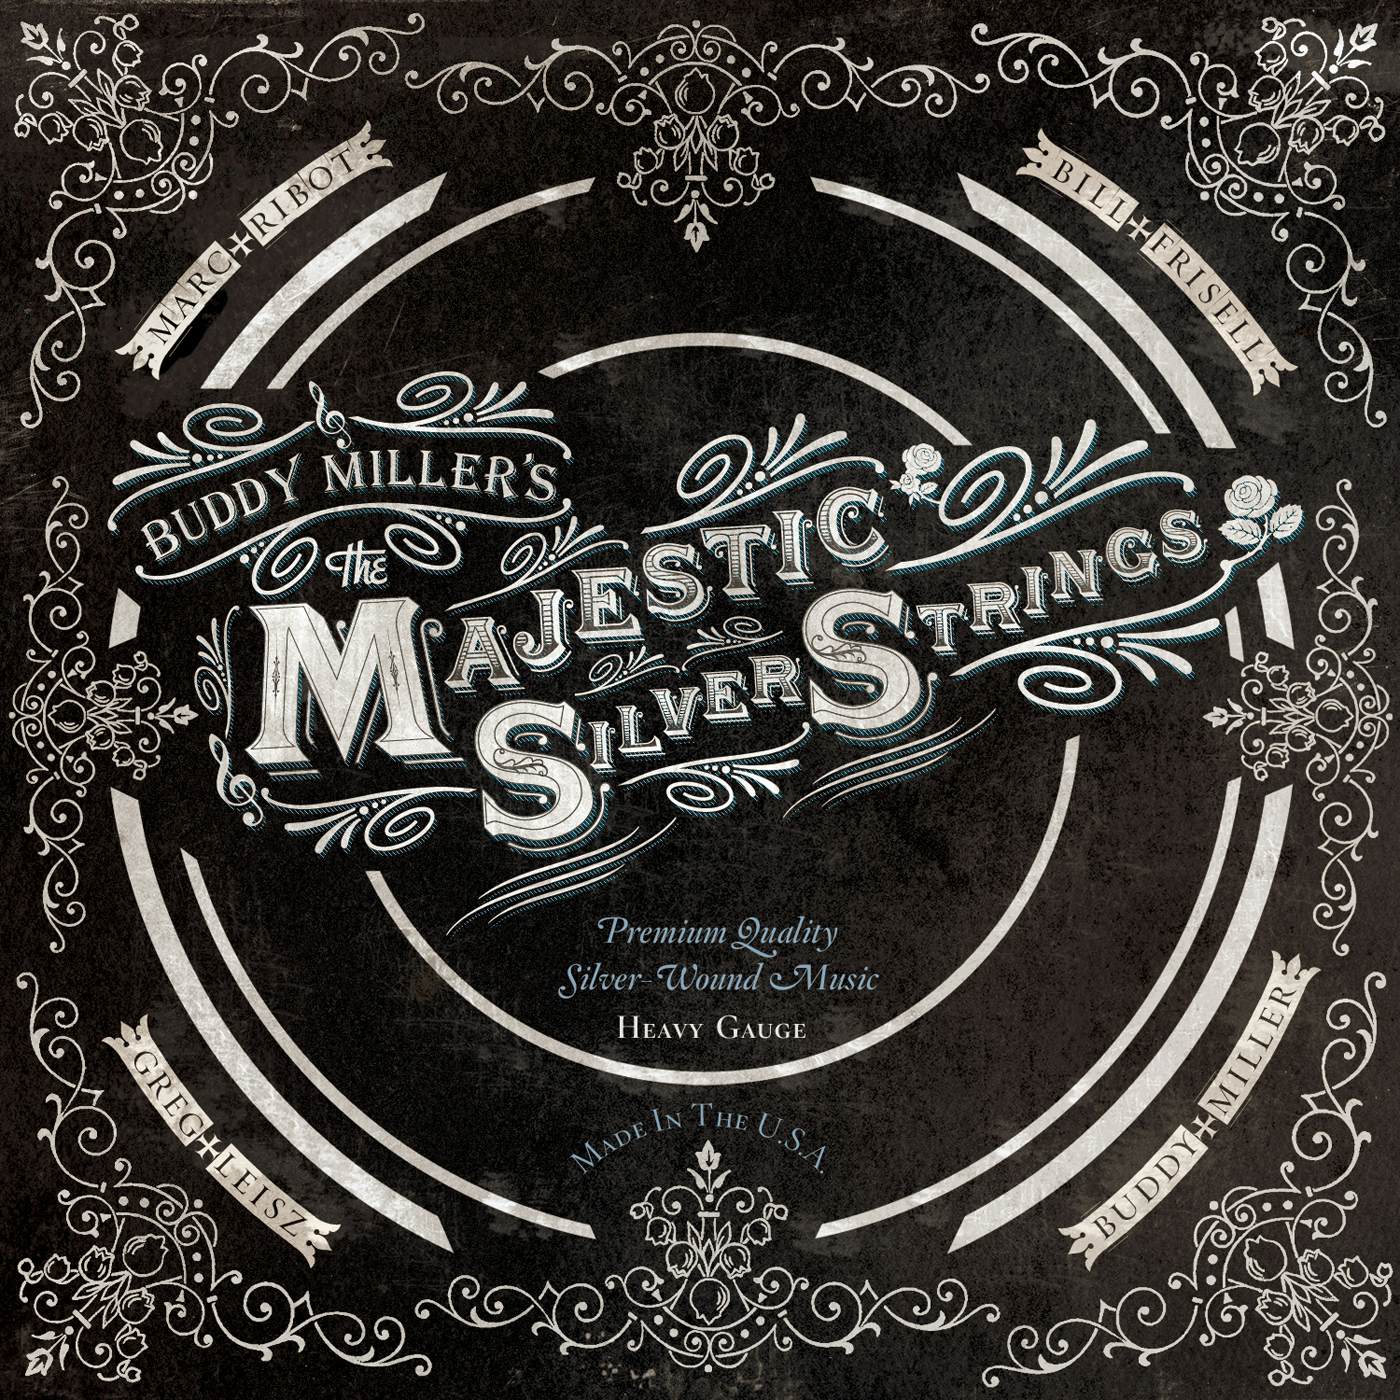 Buddy Miller MAJESTIC SILVER STRINGS CD